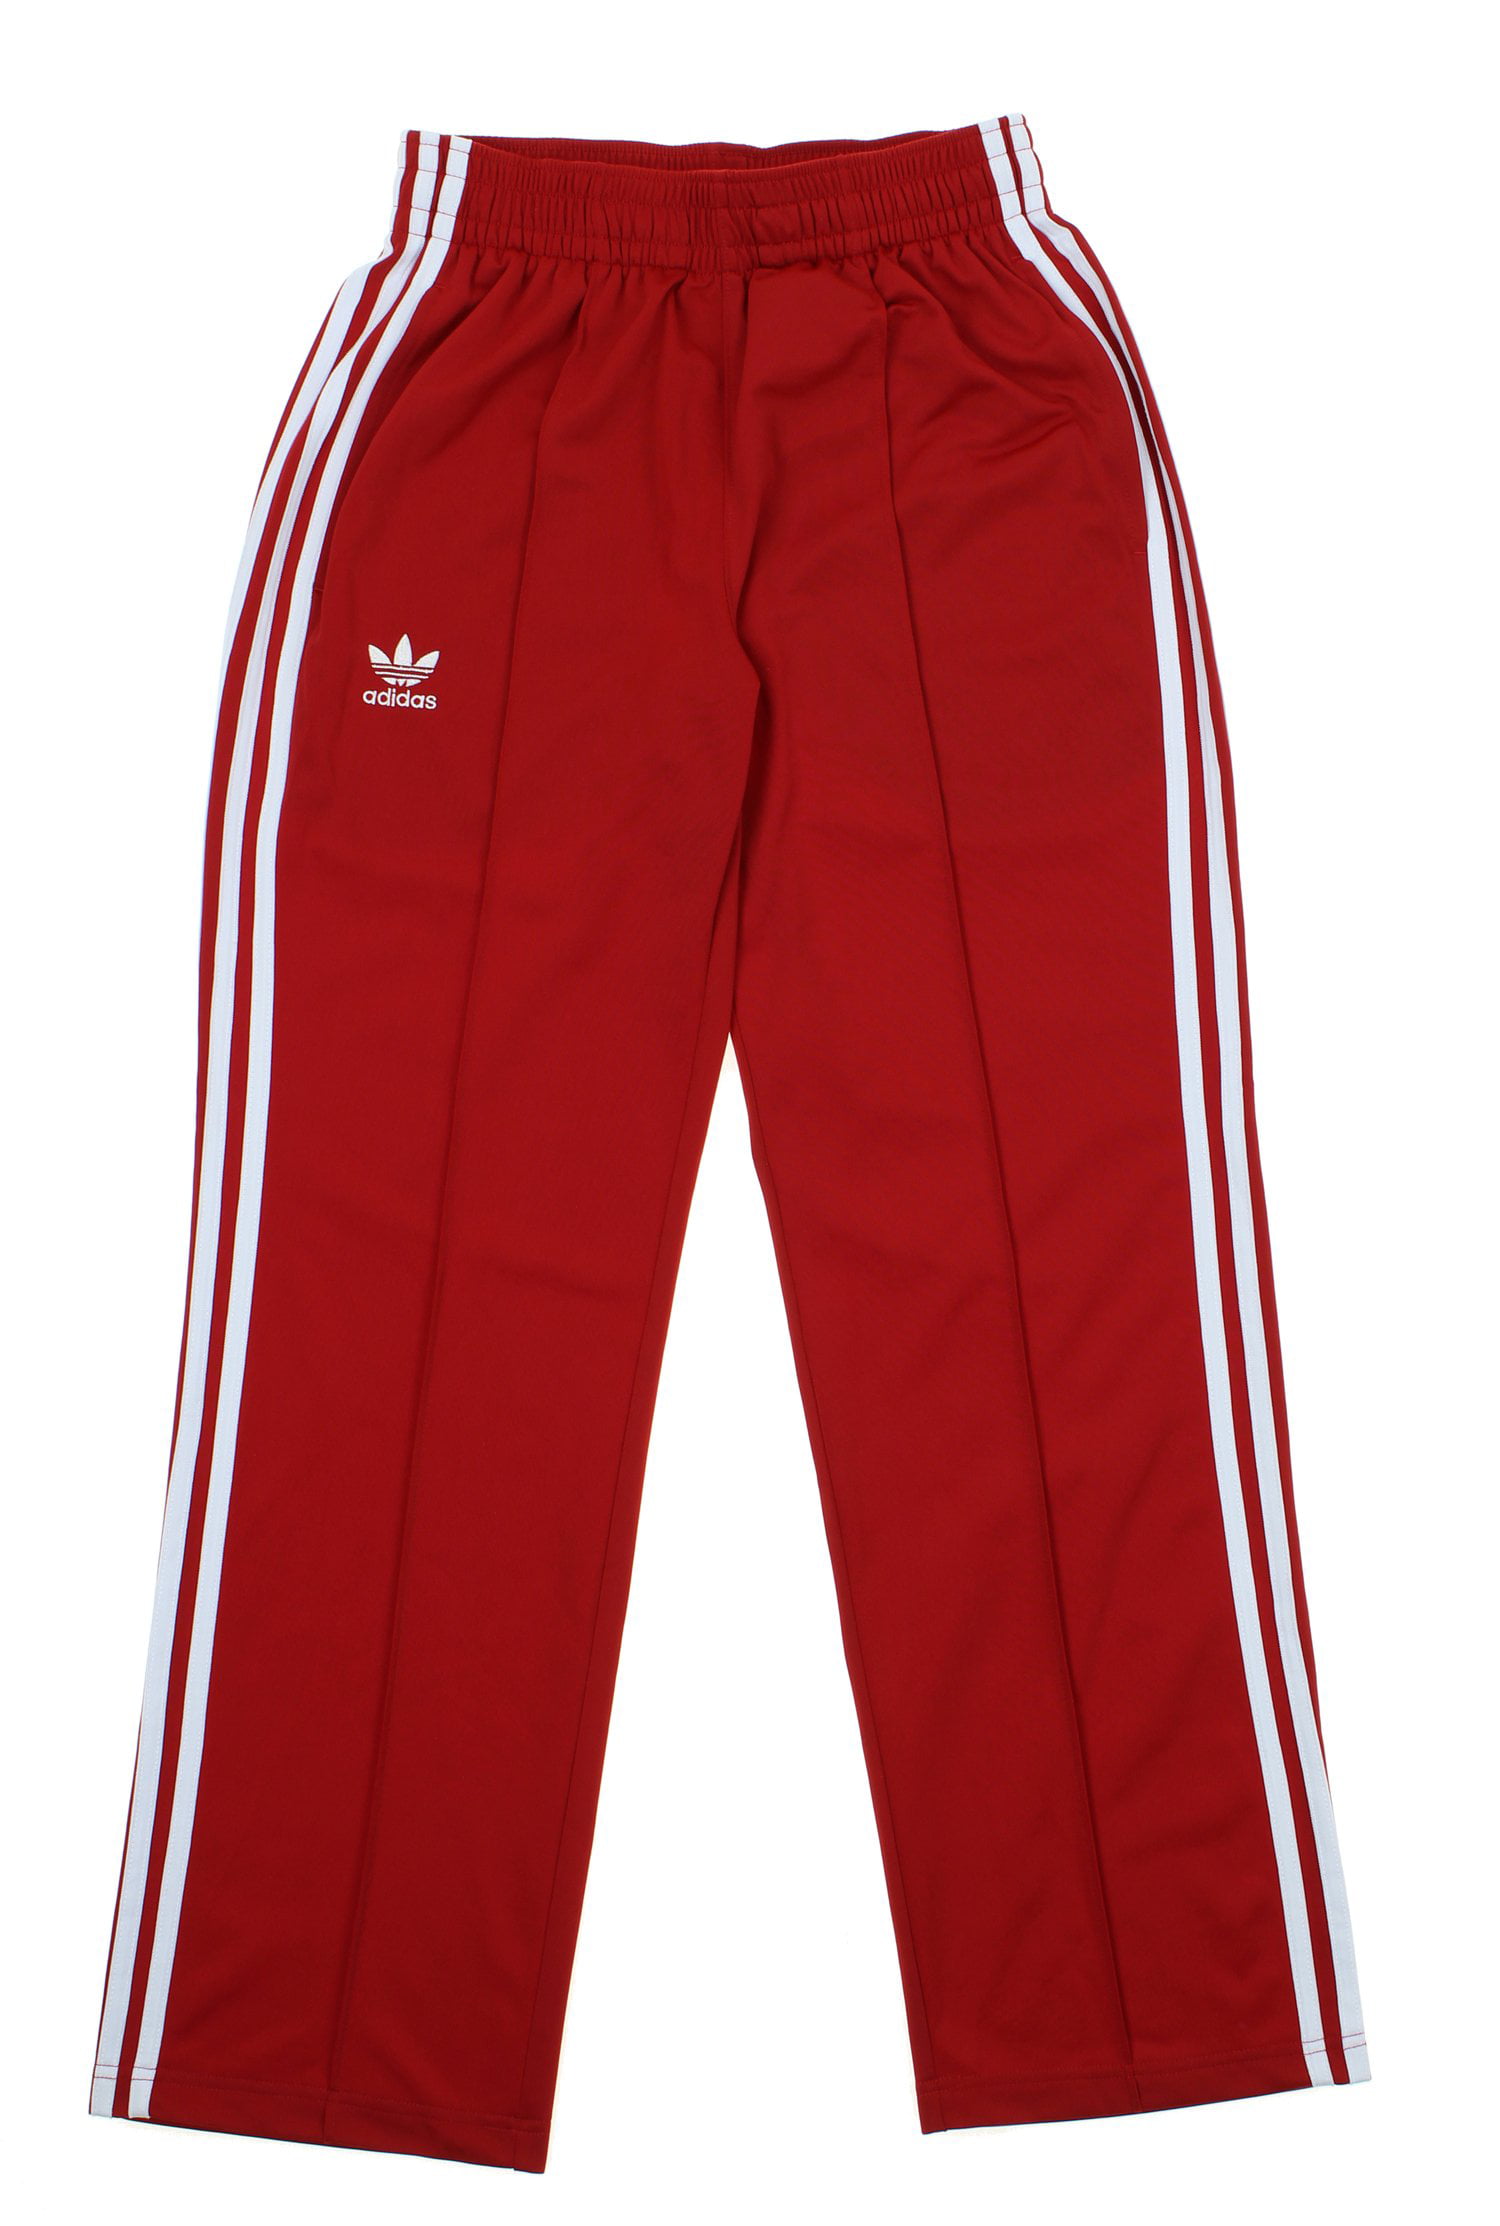 Adidas Women's Poly Legacy Track Pants, Power Red - Walmart.com